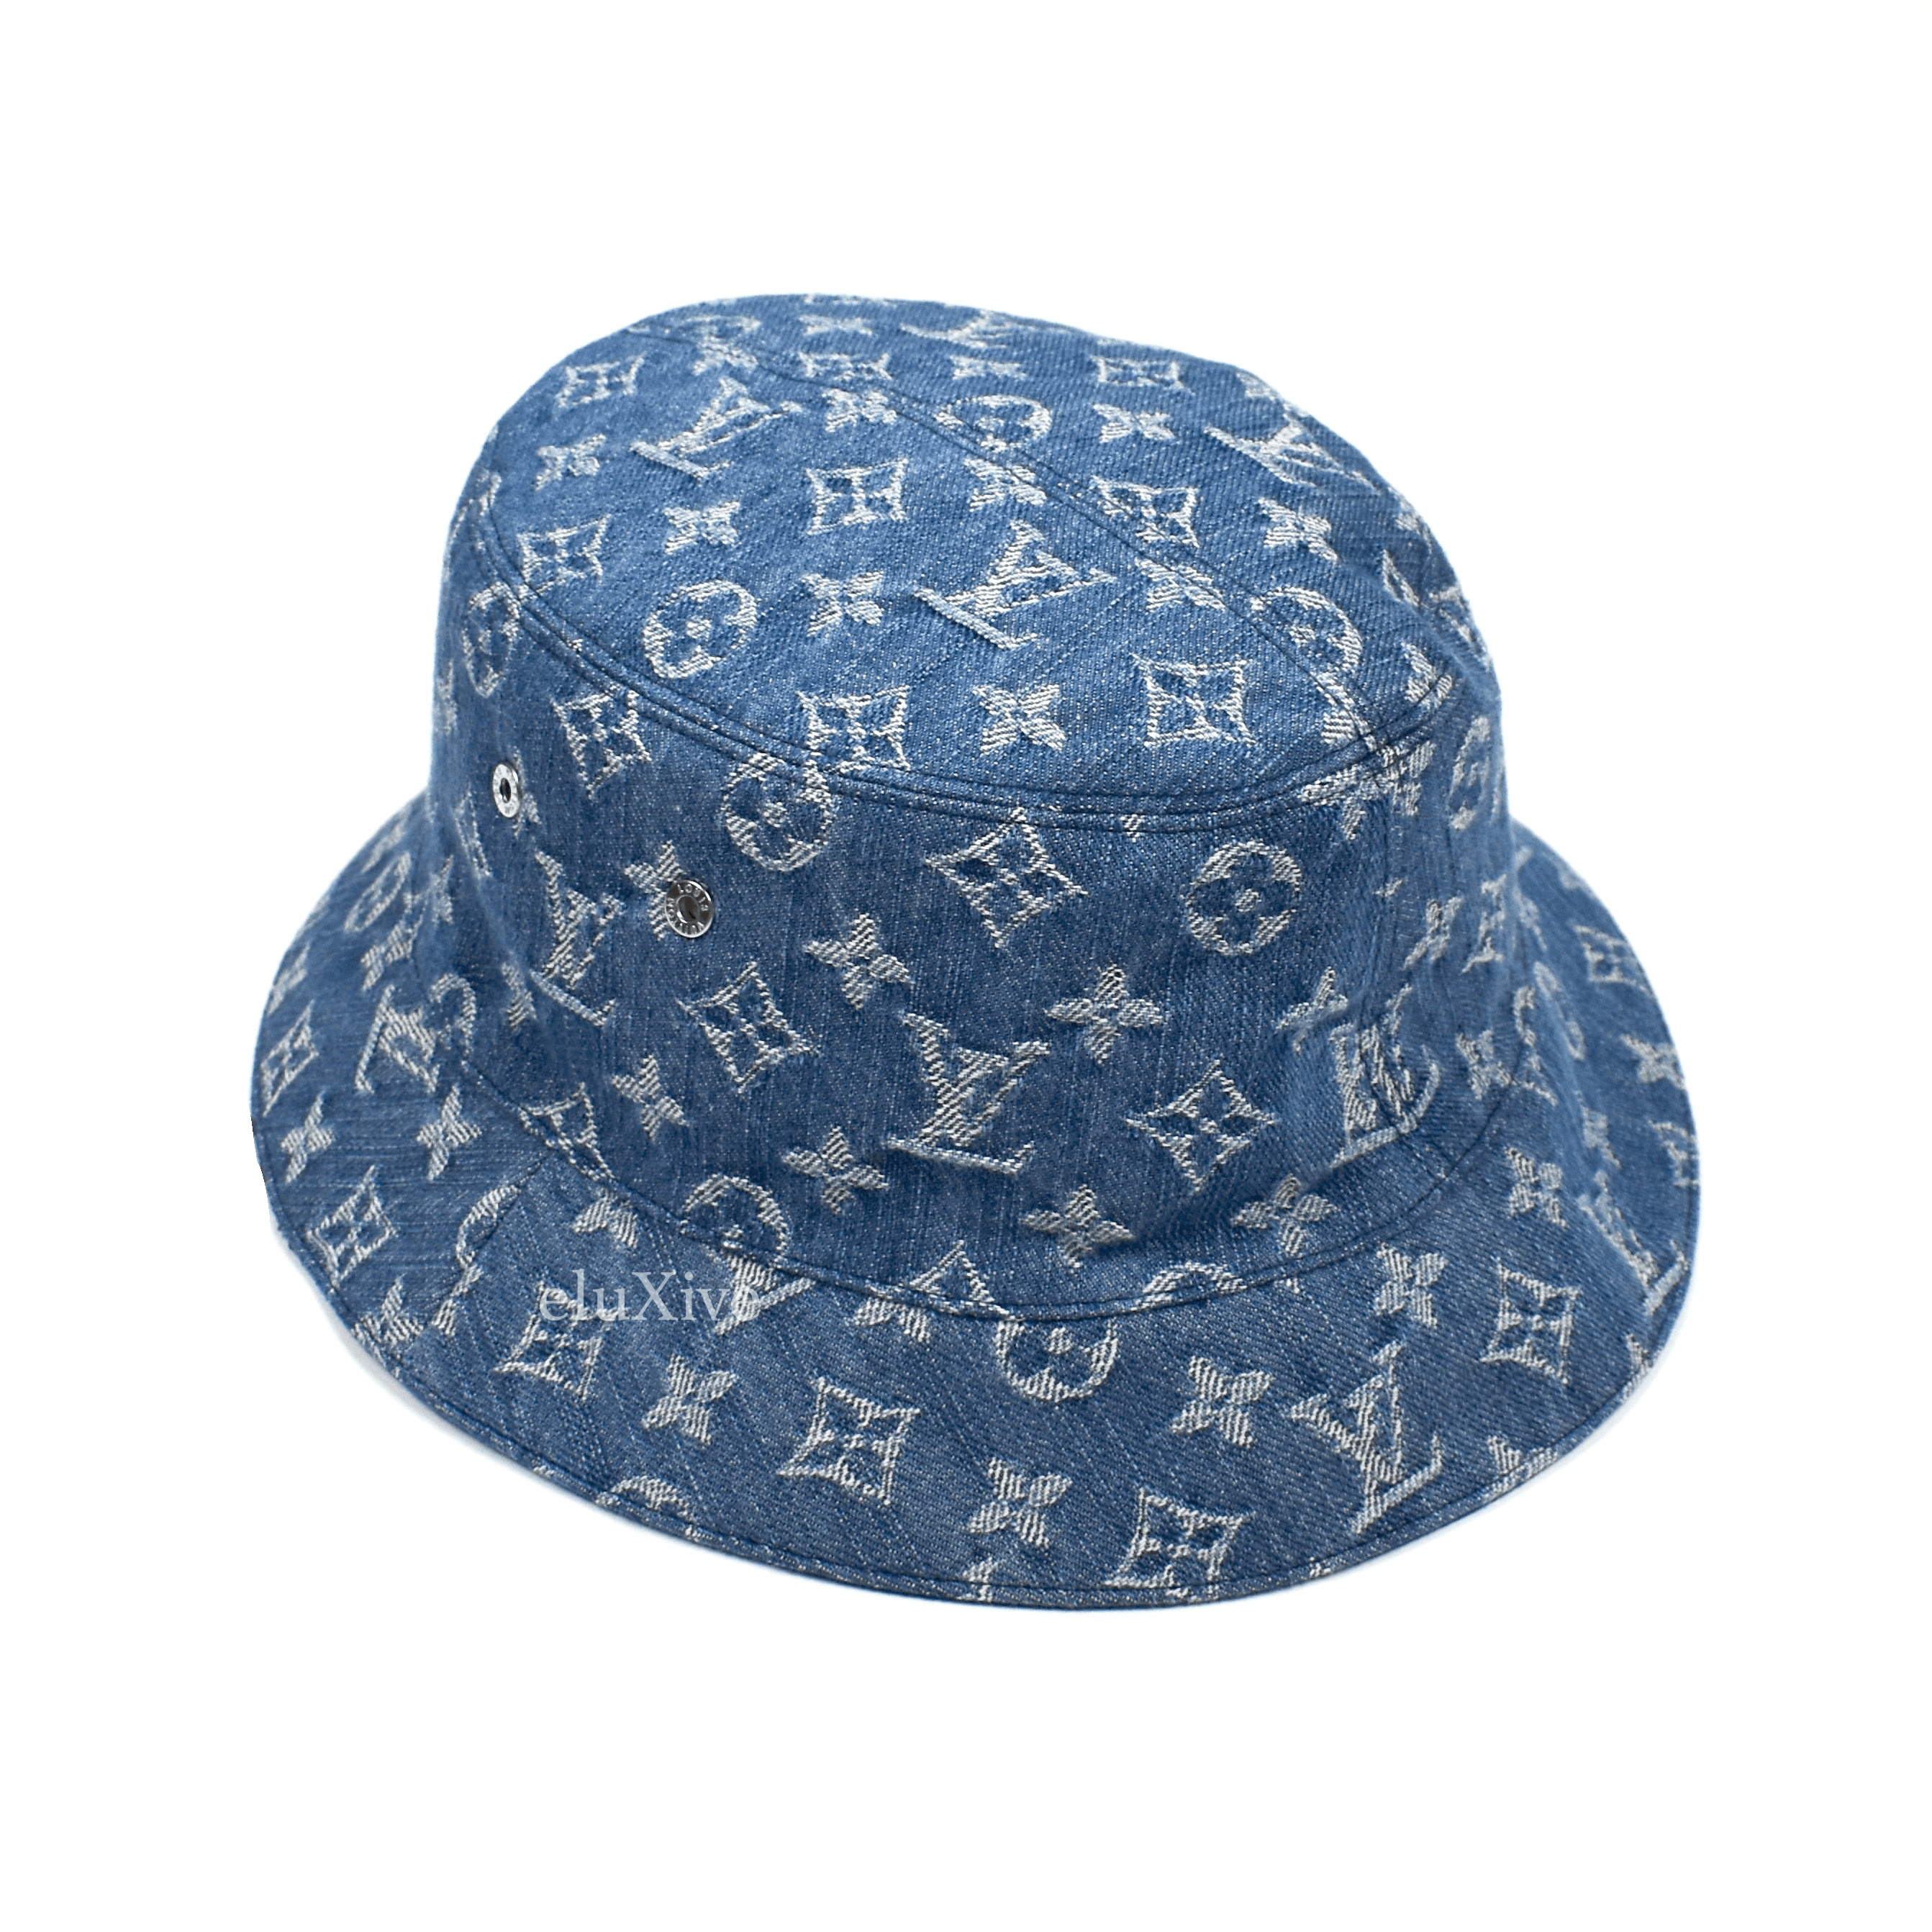 NWT Louis Vuitton LV Navy Blue Monogram Denim Hat Cap Strapback